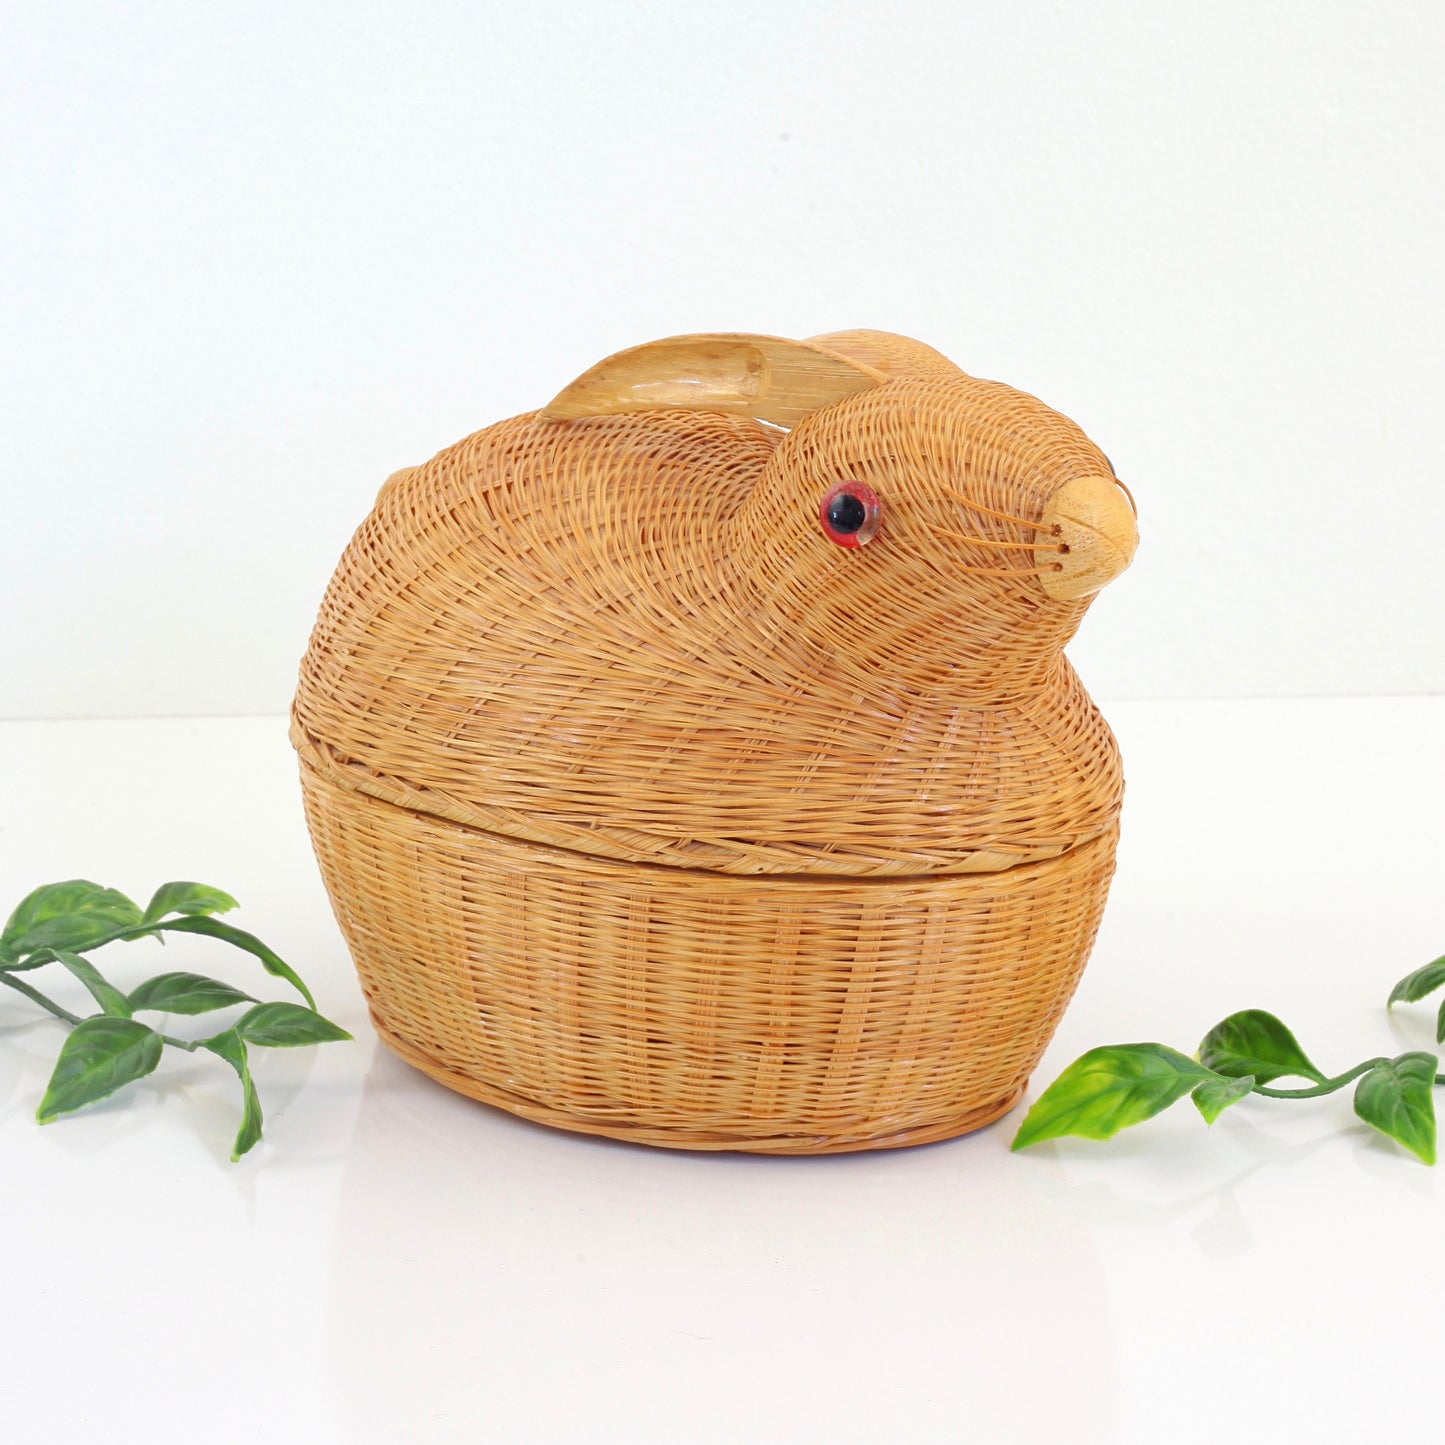 SOLD - Vintage Wicker & Bamboo Rabbit Basket